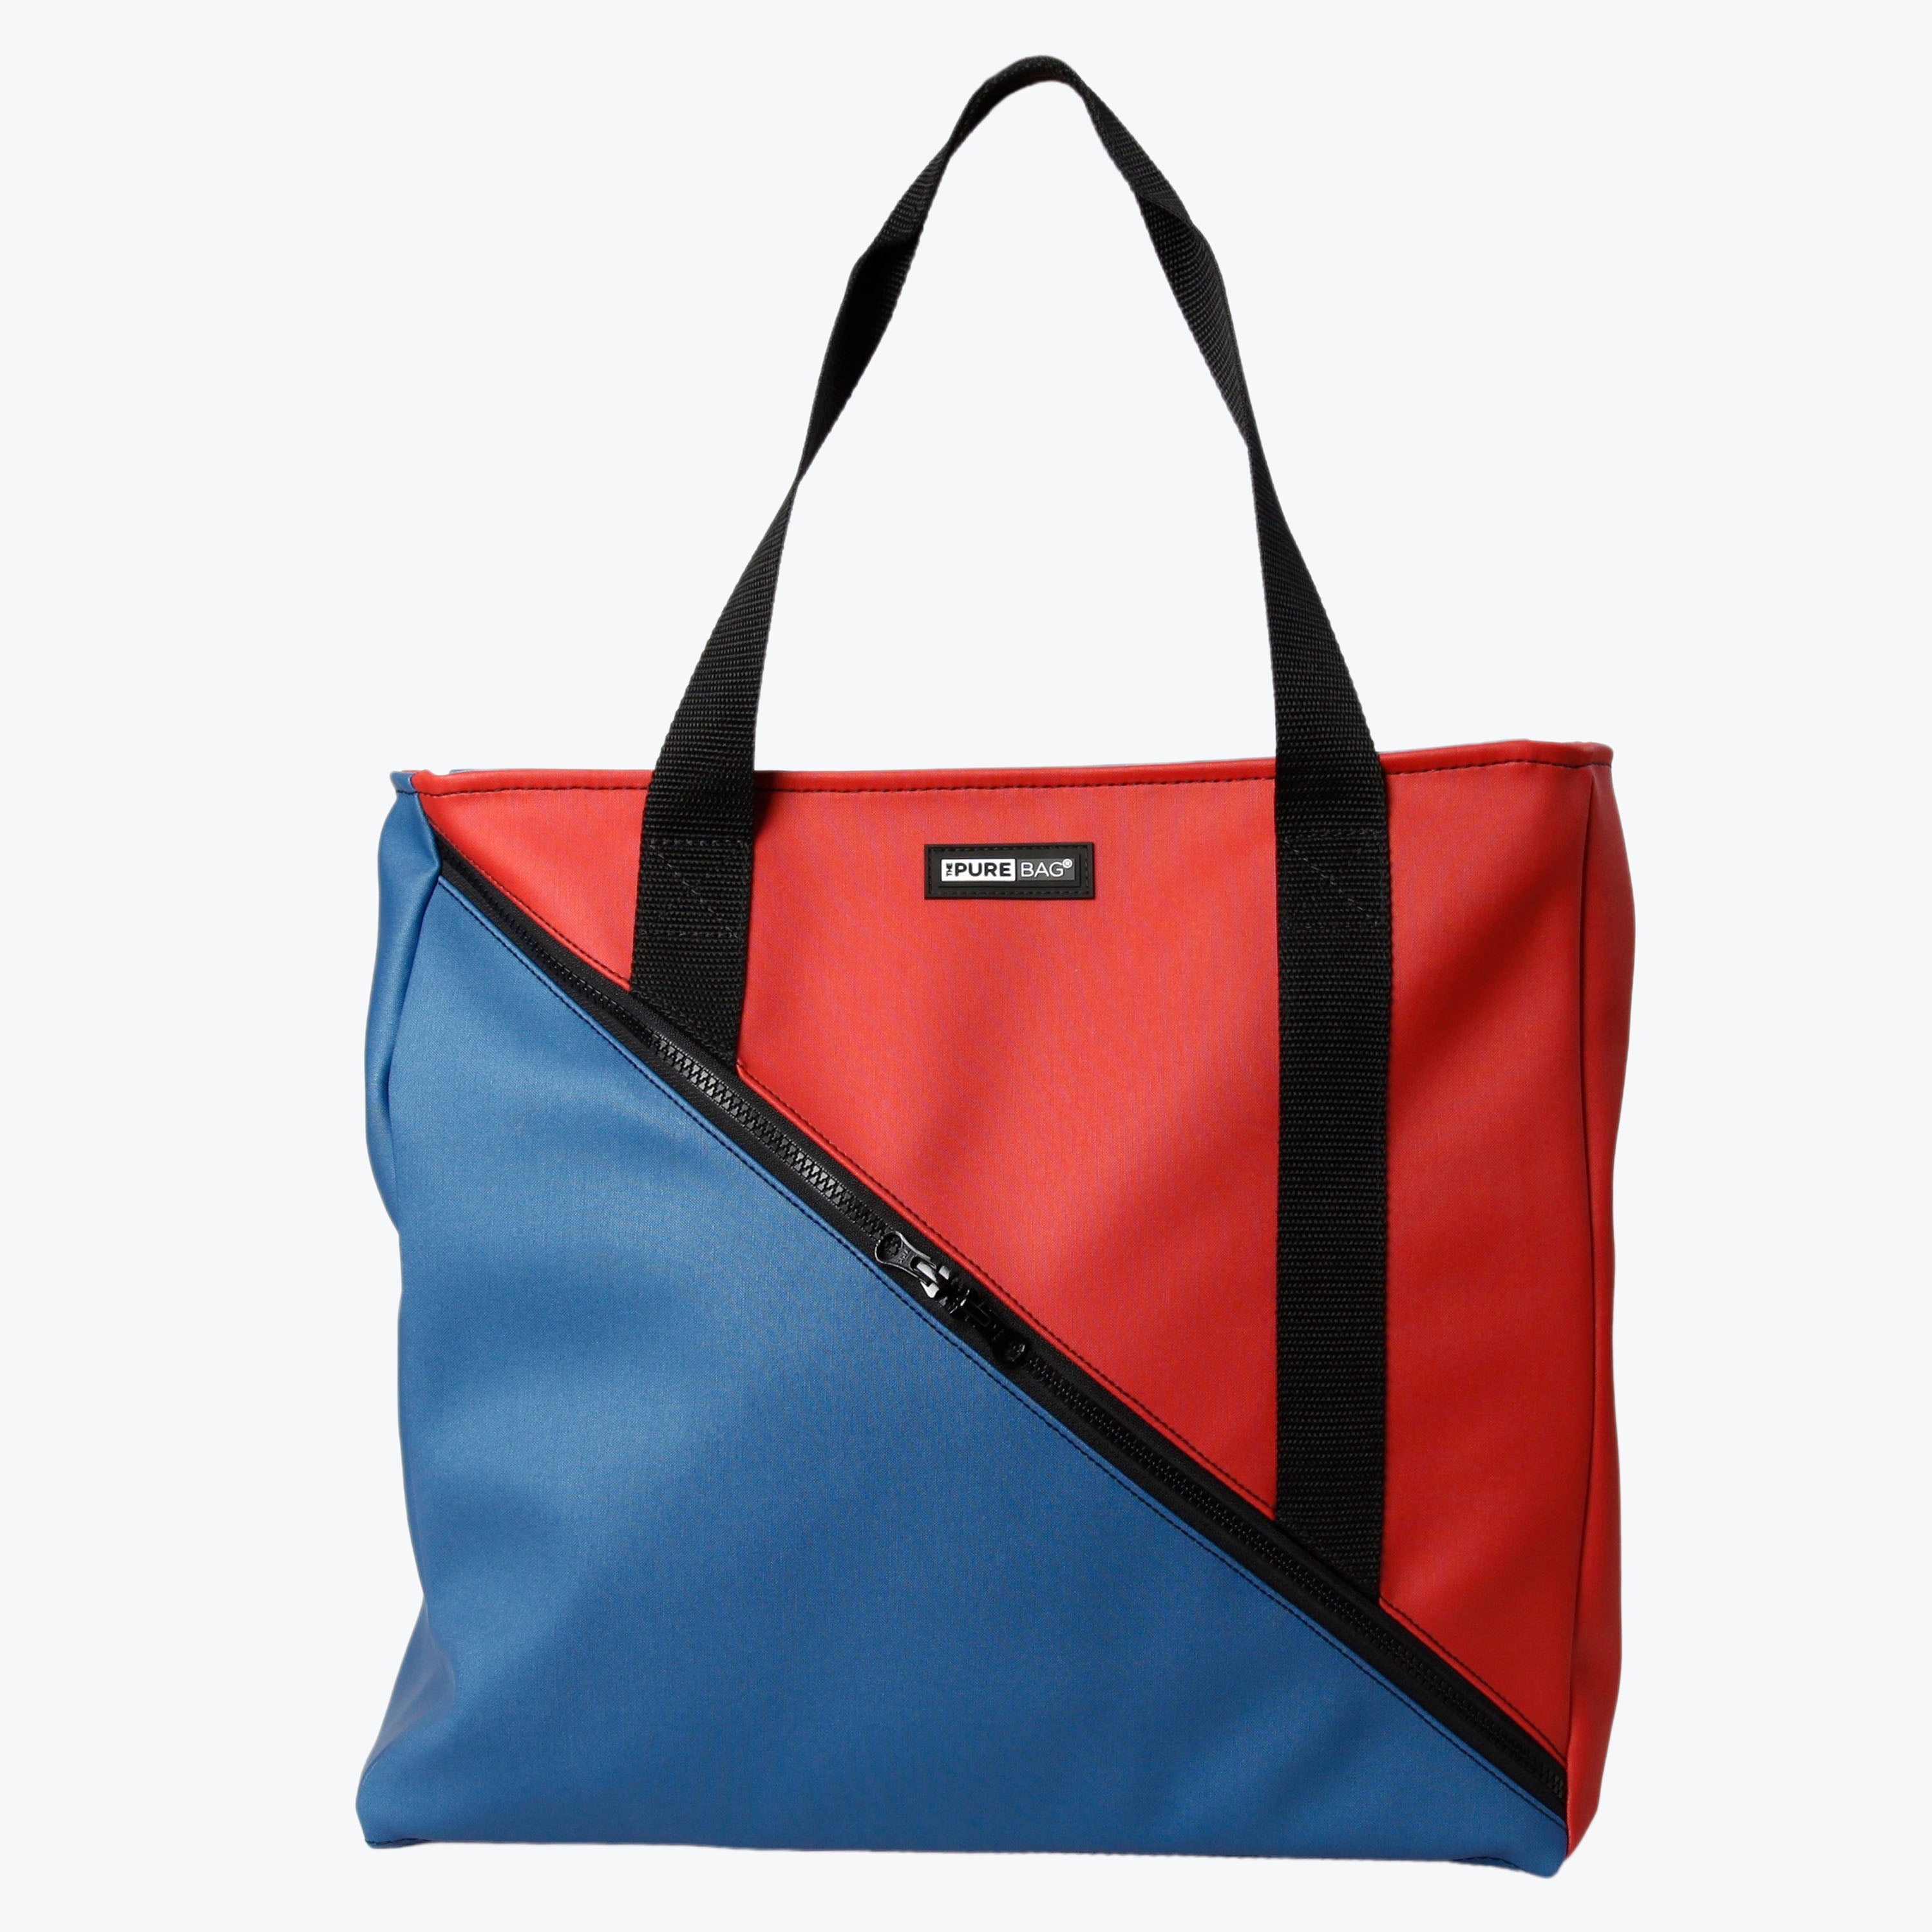 Chantal's Red Envelope Bag - Fashionista